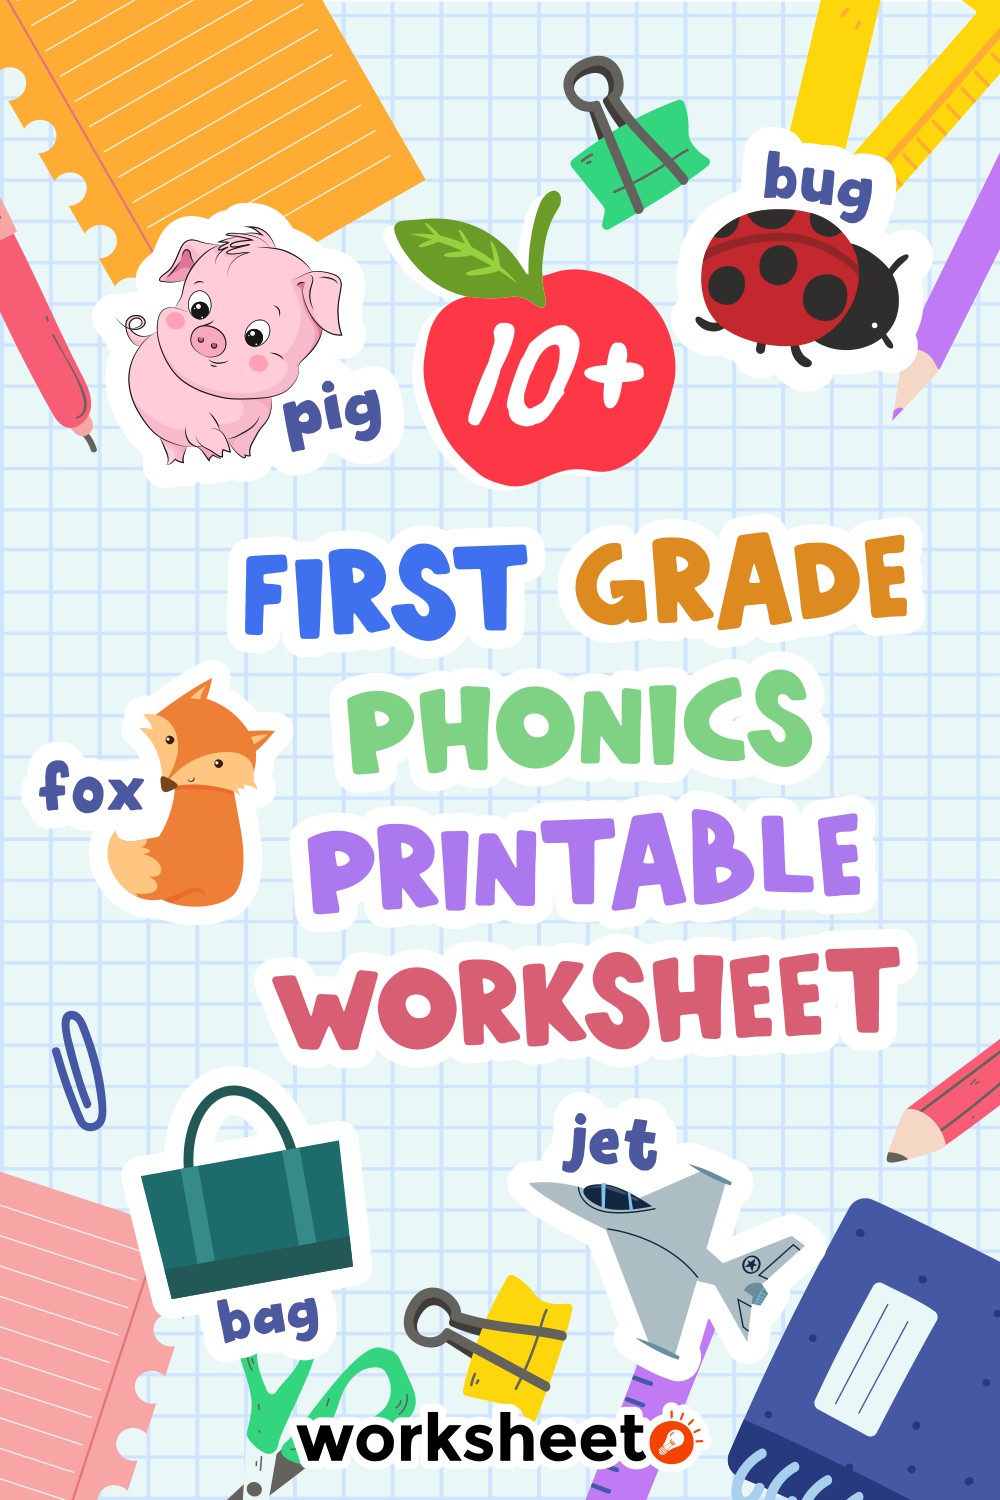 First Grade Phonics Printable Worksheet